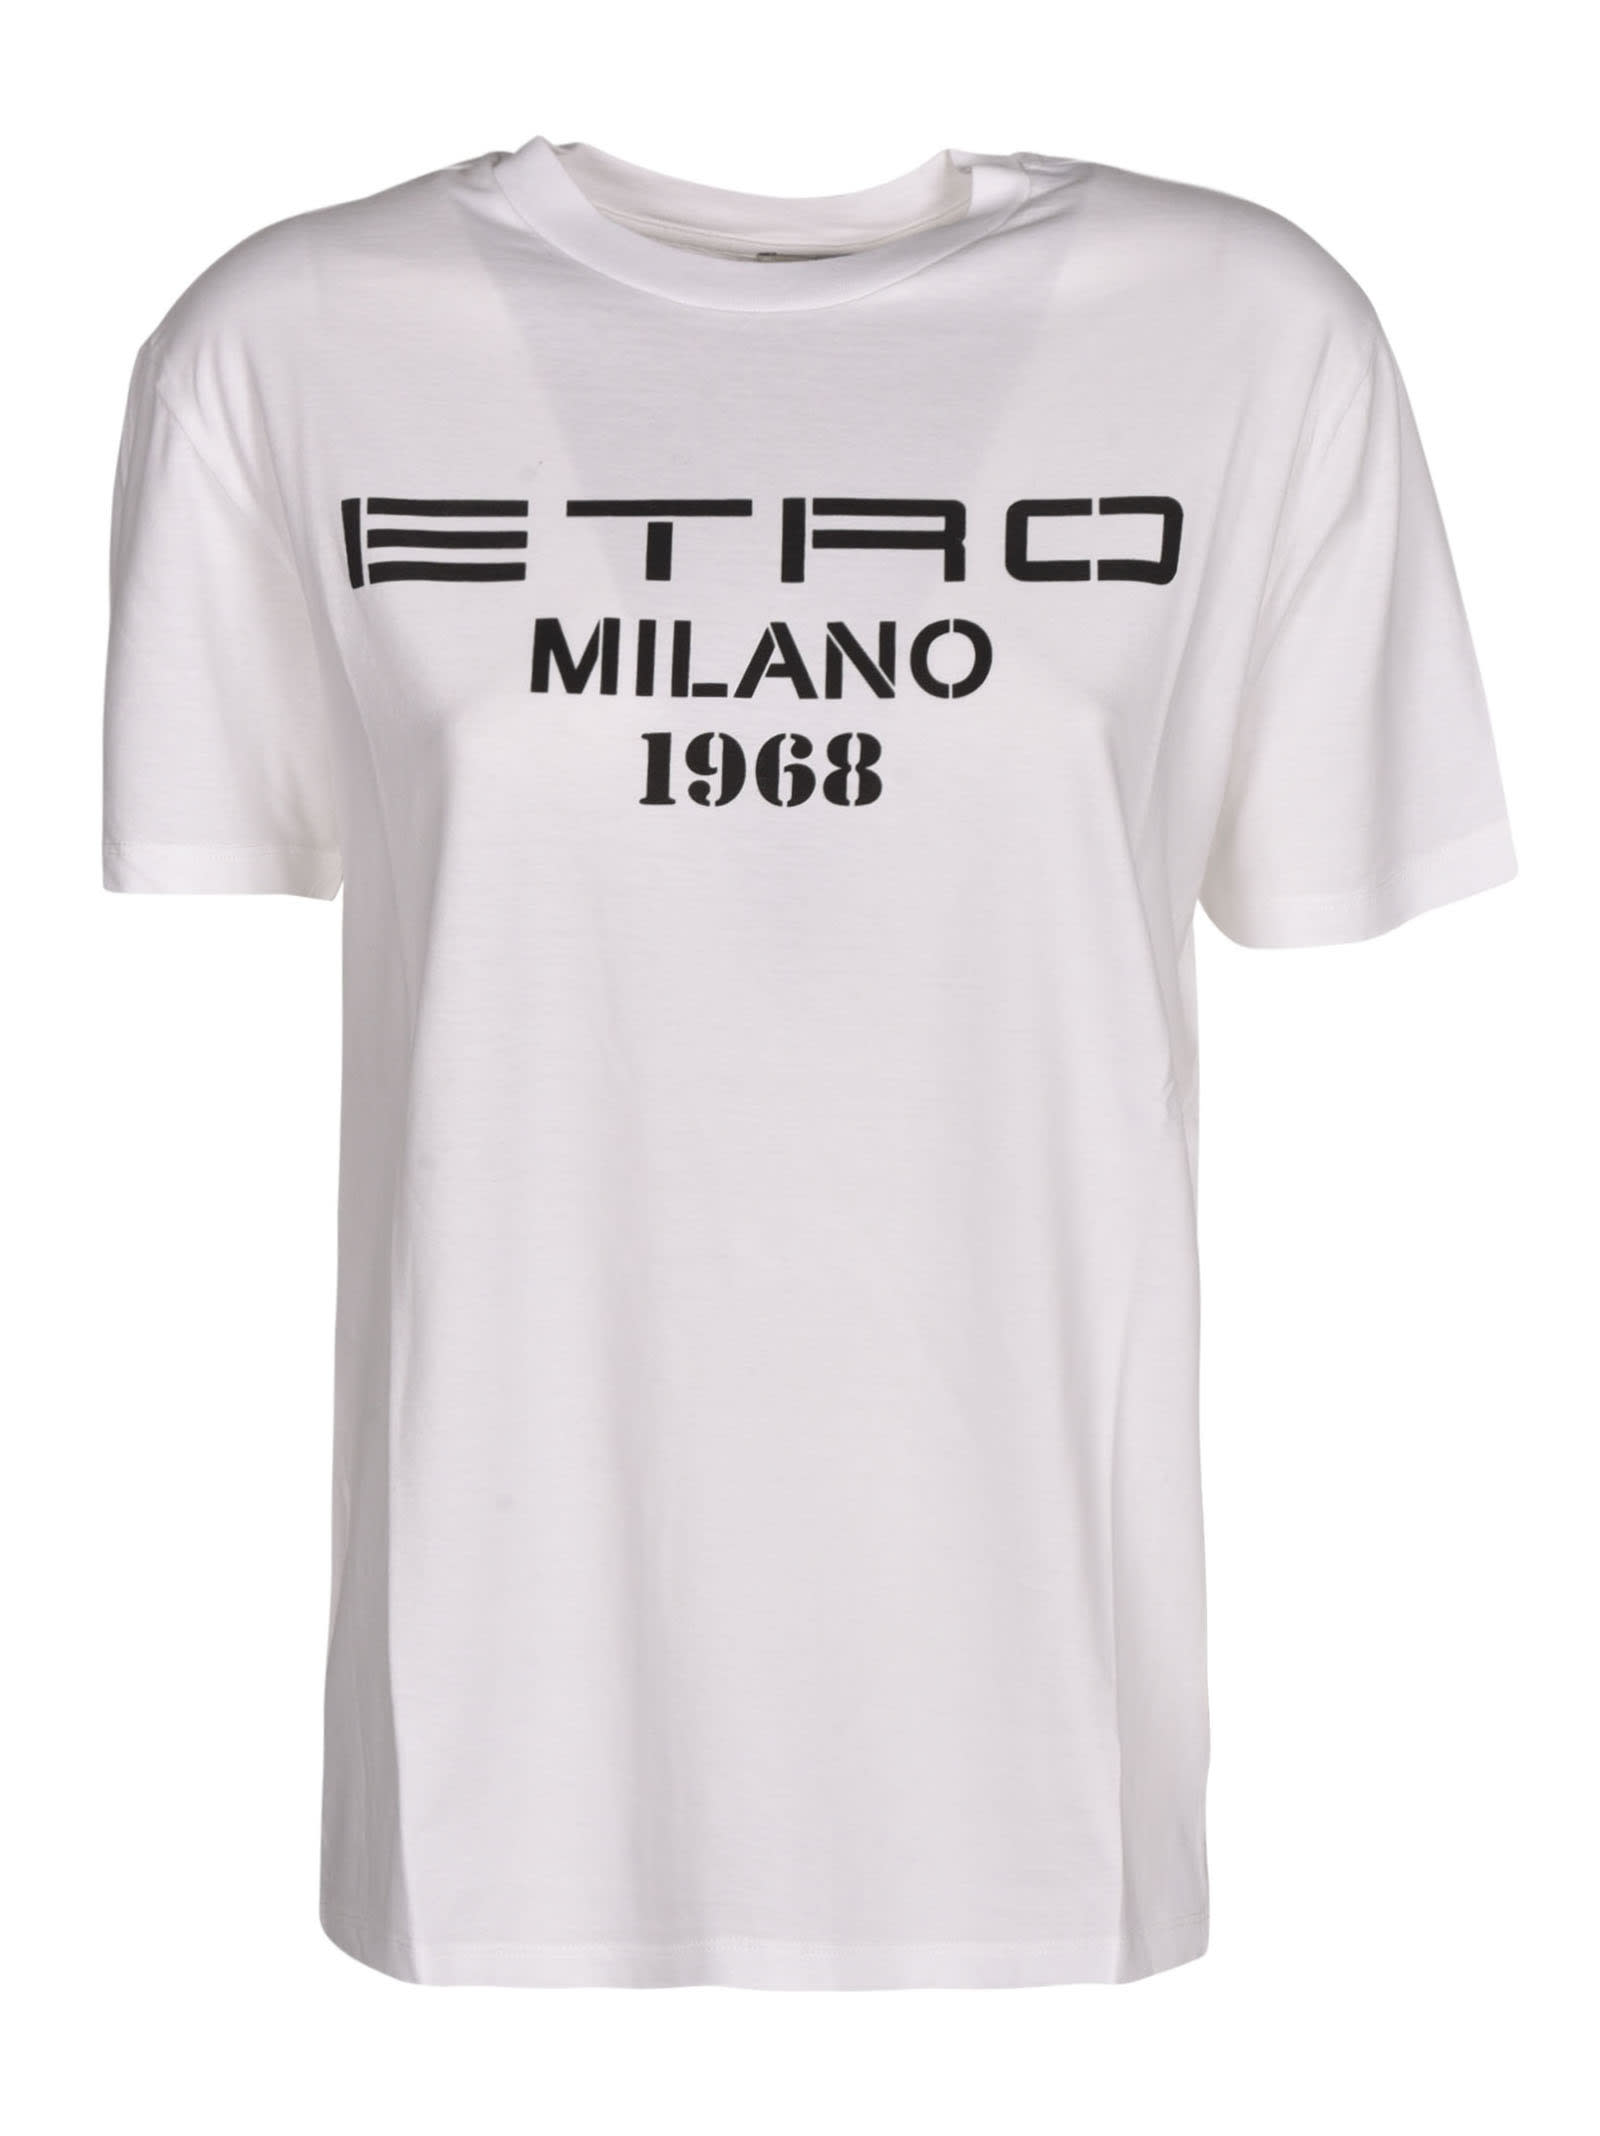 Etro Milano 1968 Logo T-shirt